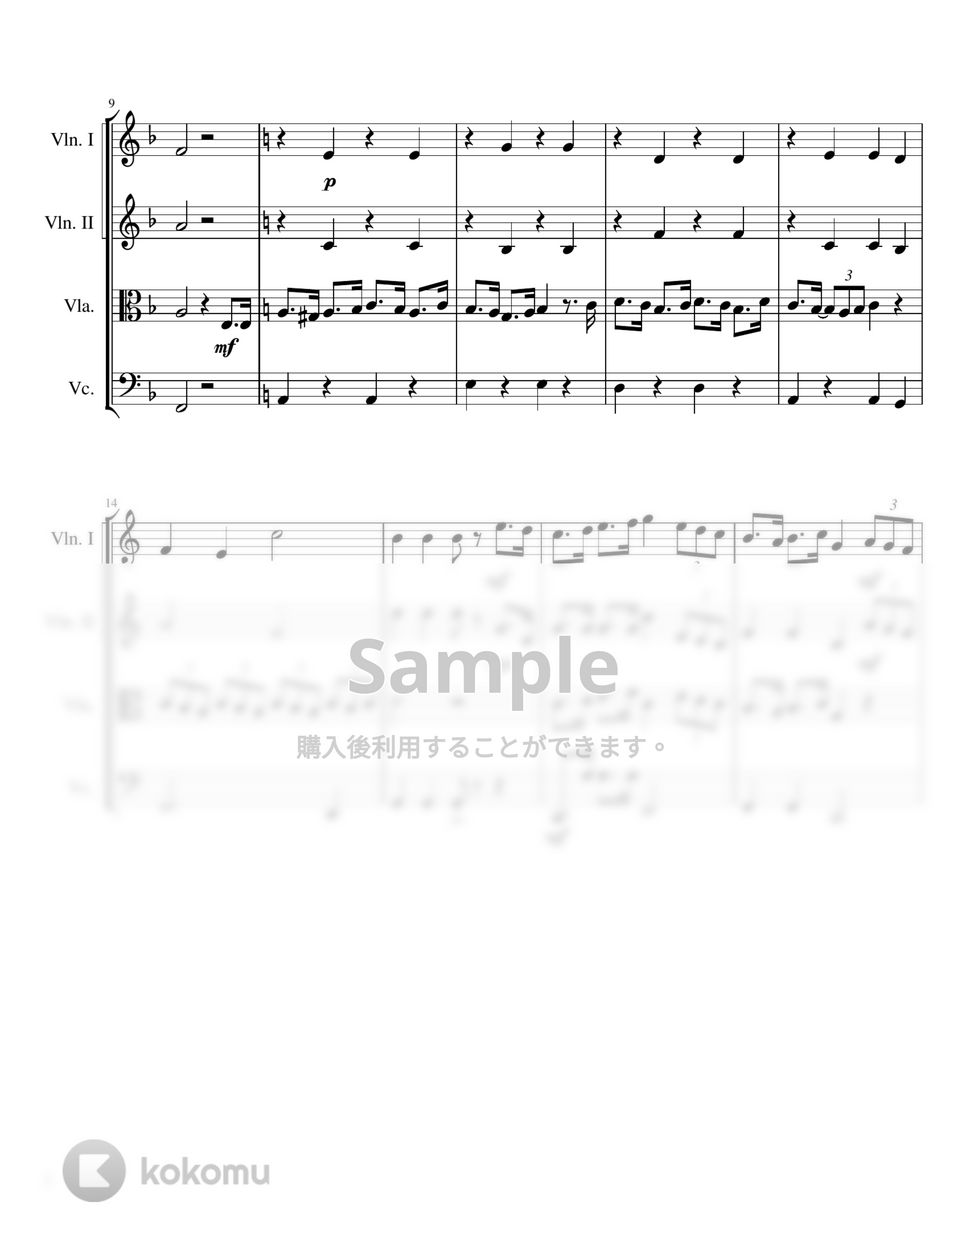 大塚　錥子 - 民衆の歌(Do You Hear The People Sing)【弦楽四重奏】 by Cellotto